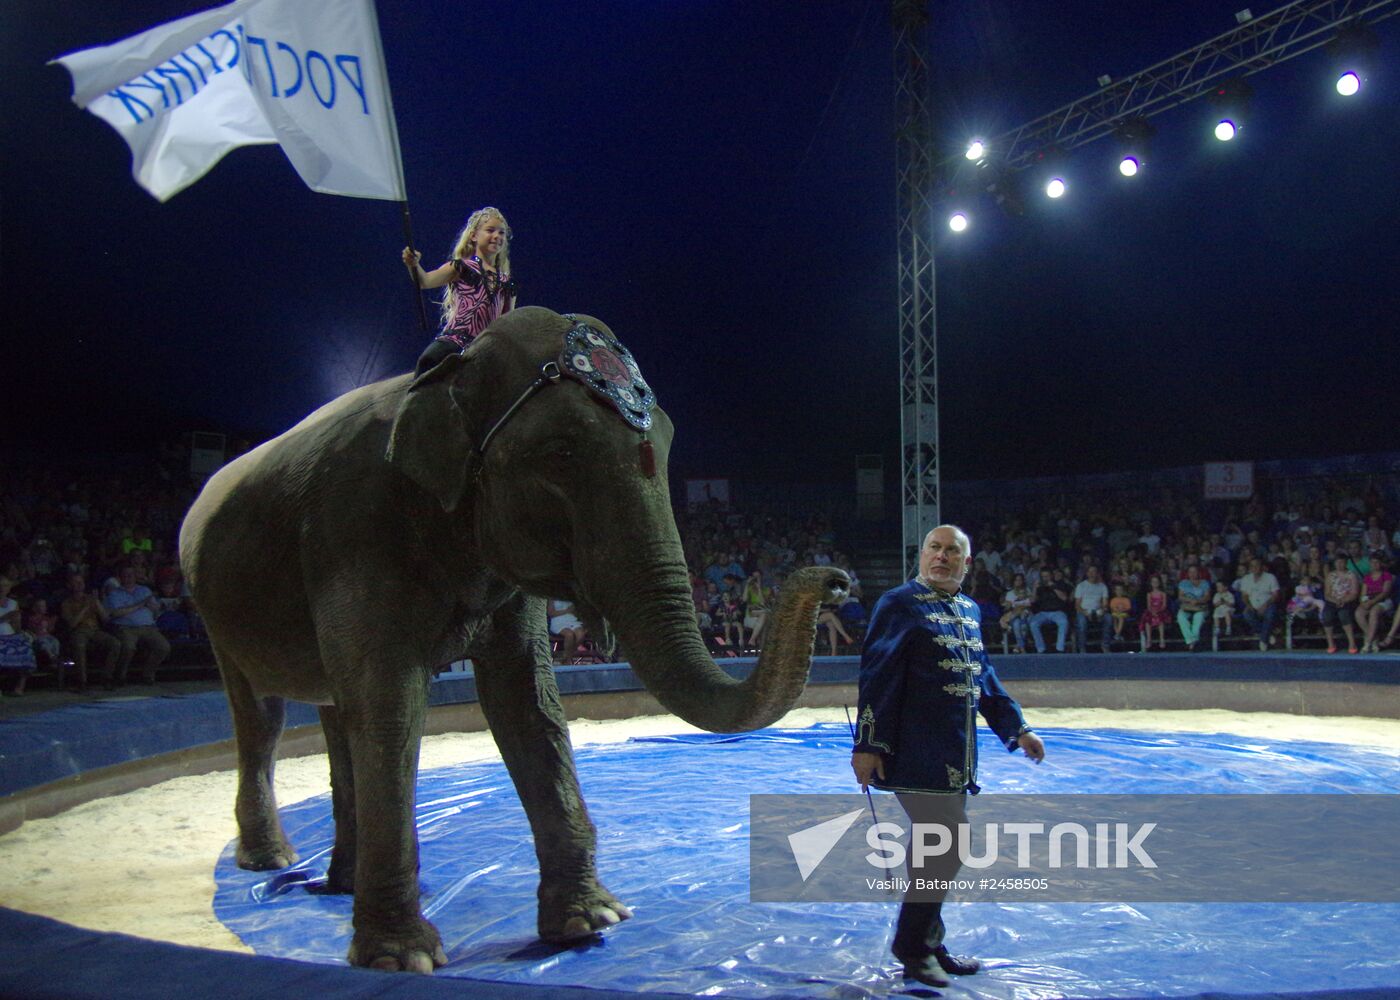 "Huge Animals Circus" in Sevastopol